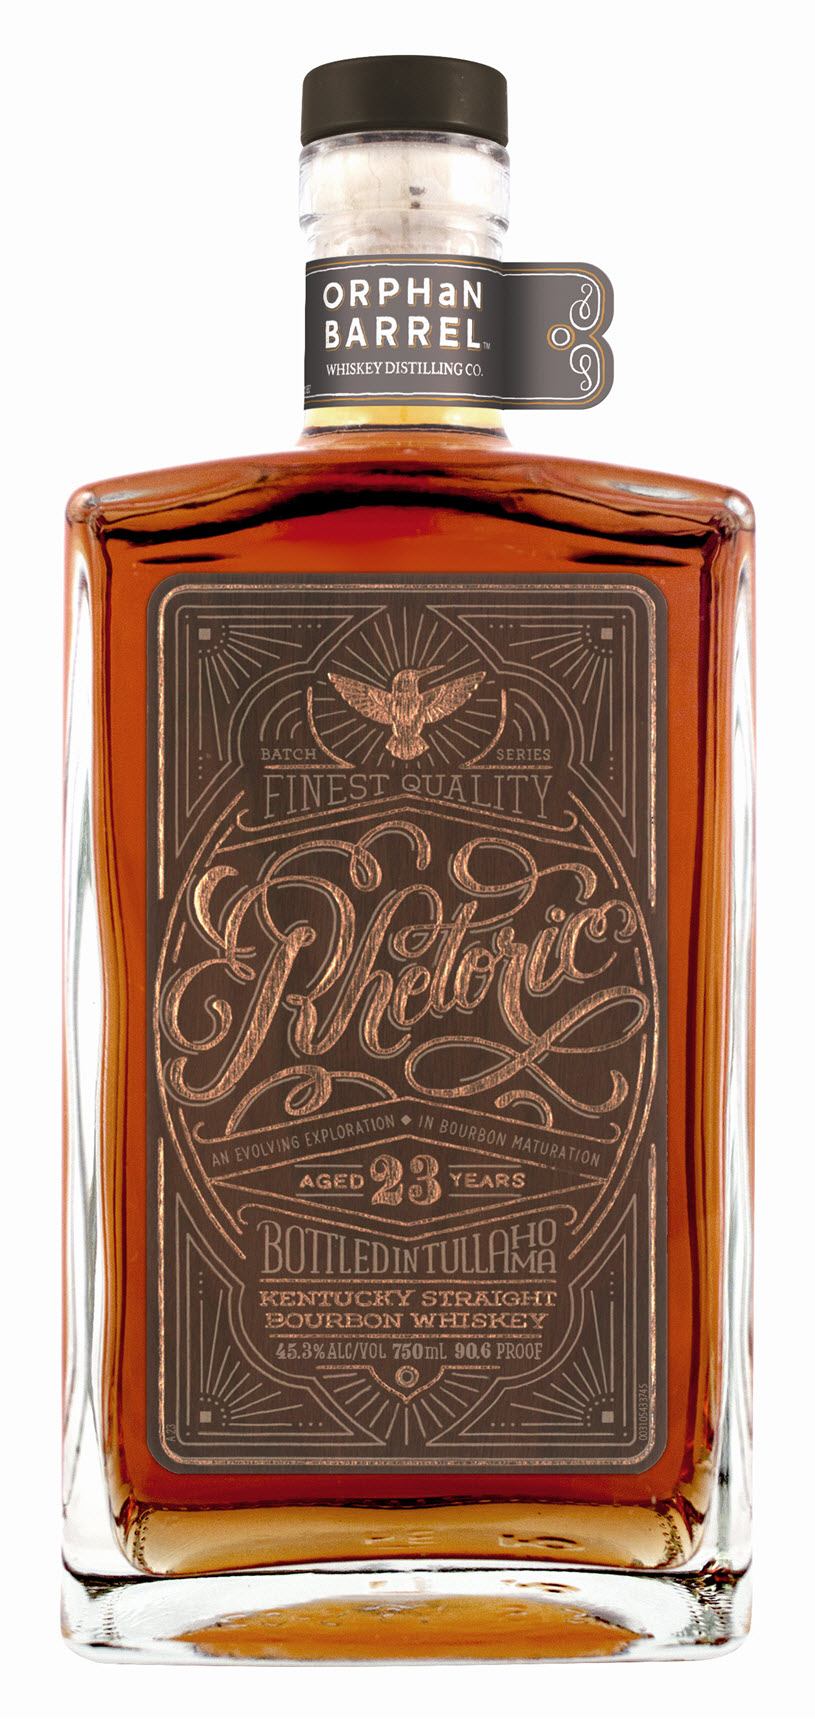 Orphan Barrel Whiskey Distilling Company - Rhetoric 23-Year-Old Kentucky Straight Bourbon Whiskey